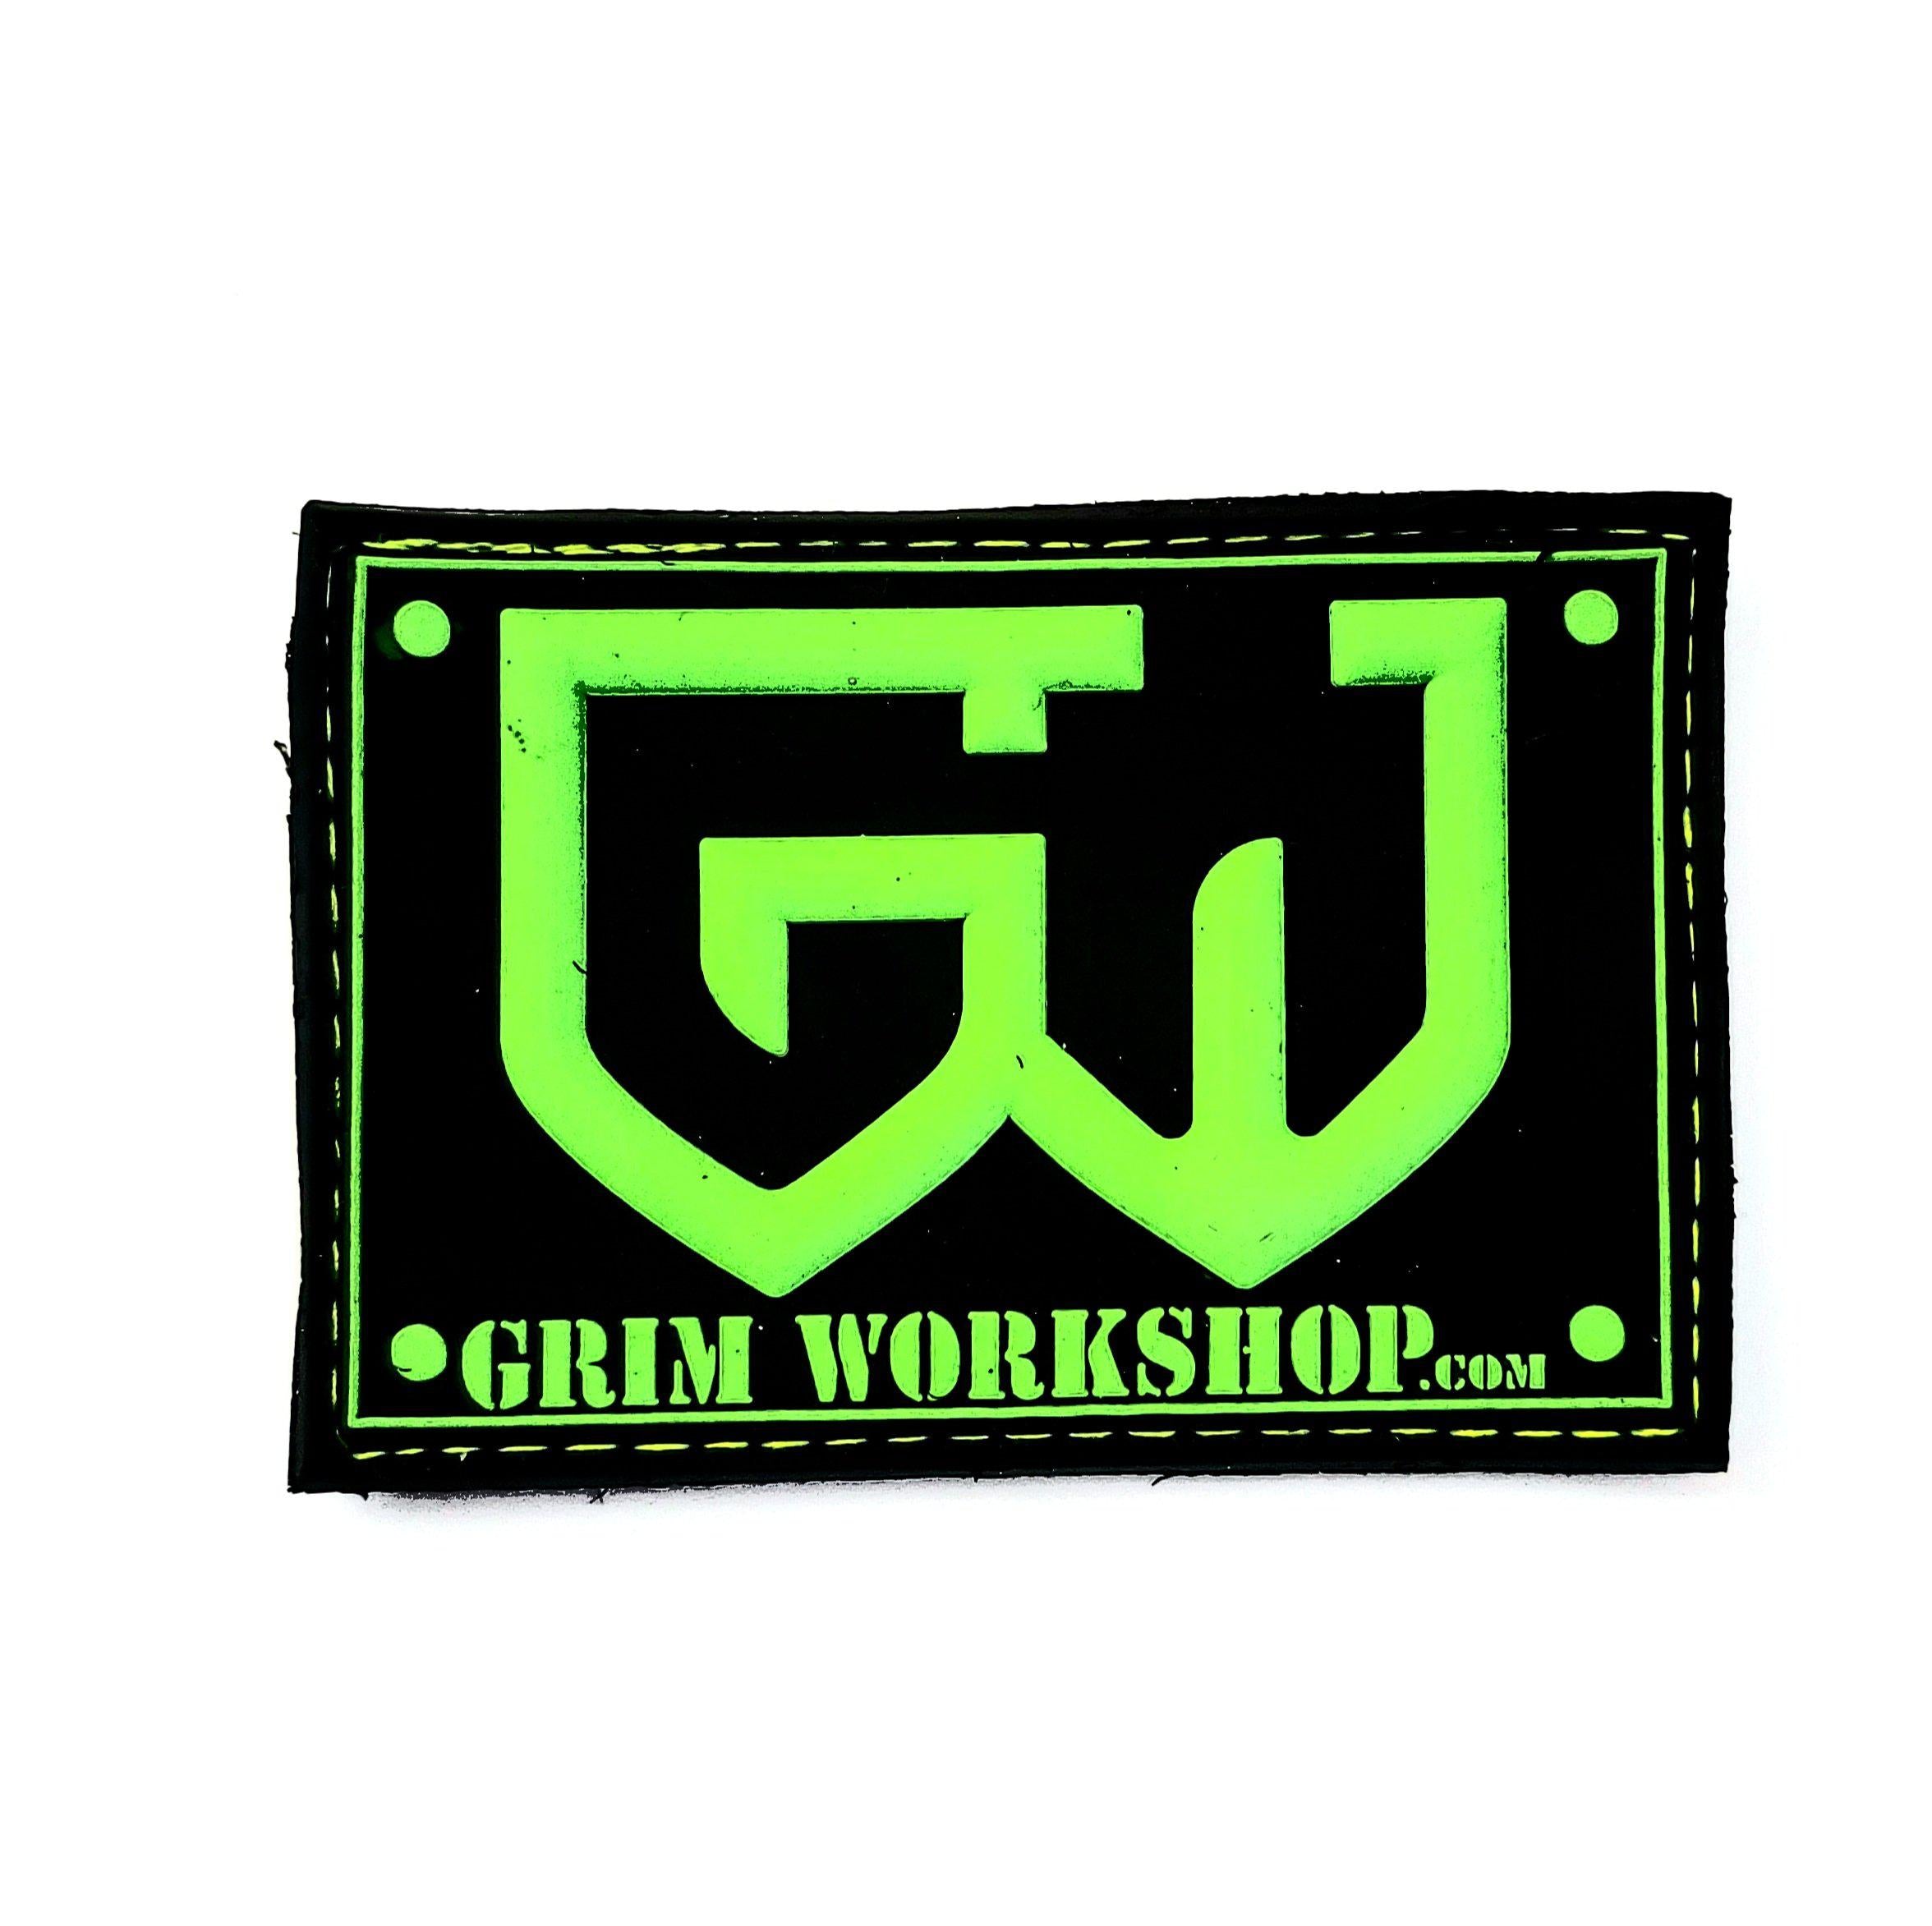 Grim Green Morale Patch with Hidden Pocket-Grimworkshop-bugoutbag-bushcraft-edc-gear-edctool-everydaycarry-survivalcard-survivalkit-wilderness-prepping-toolkit